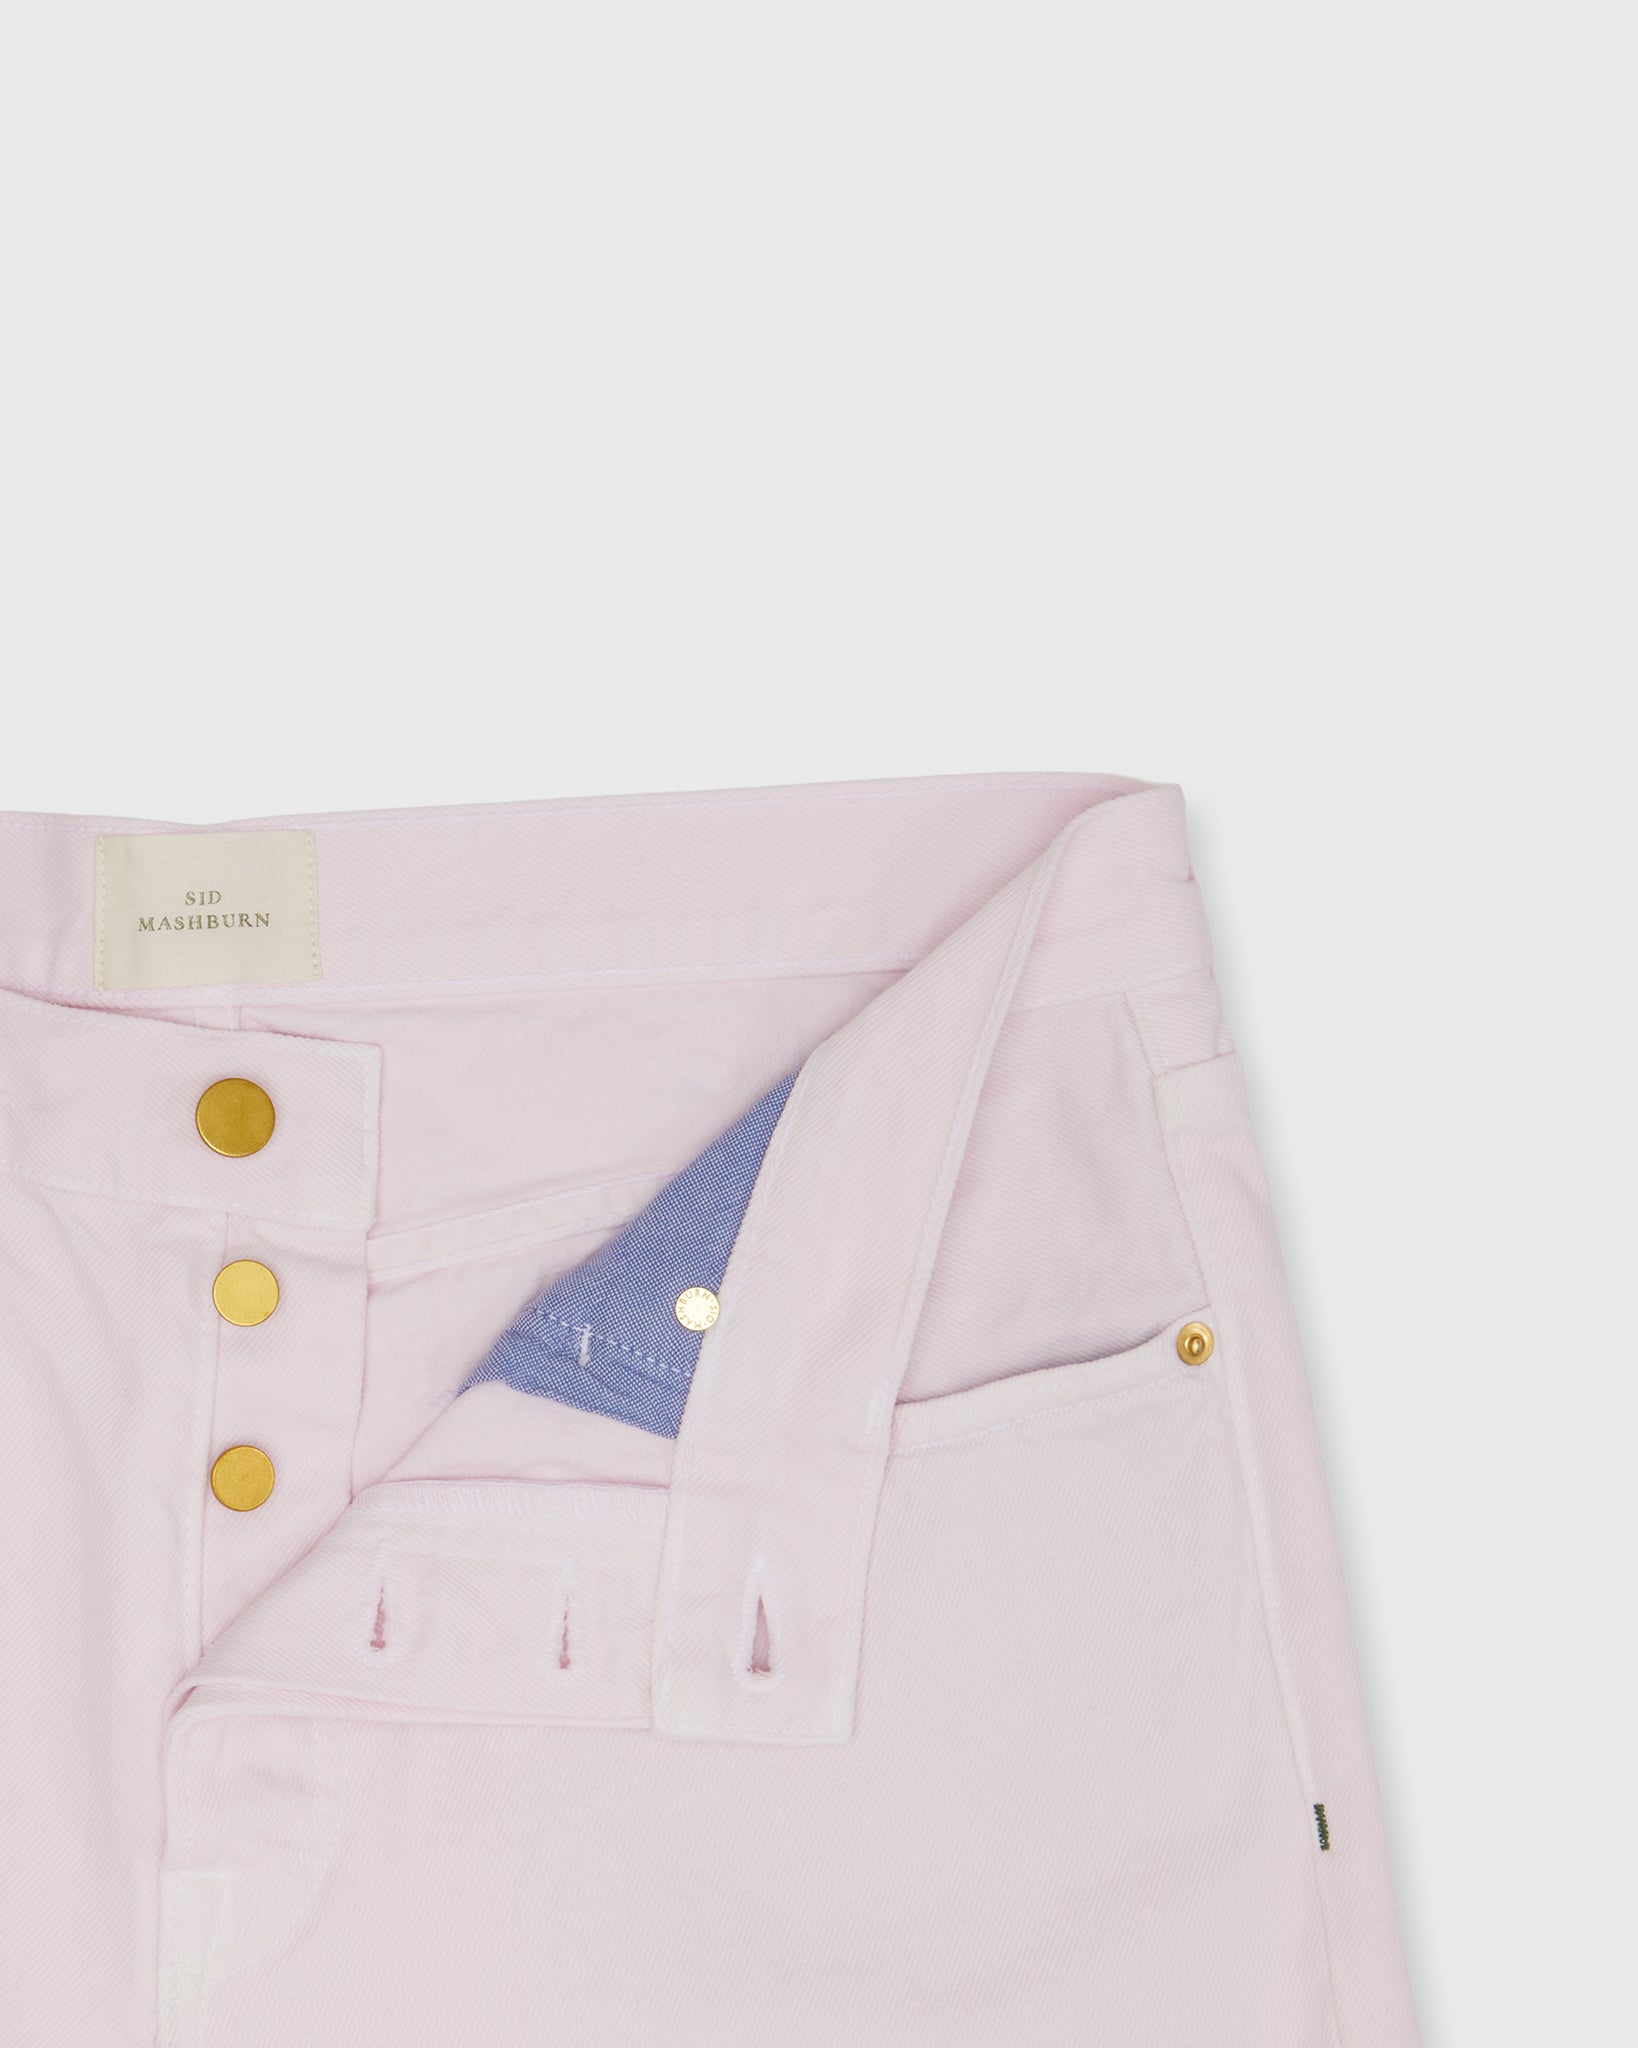 Slim Straight Jean in Pale Pink Garment-Dyed Denim